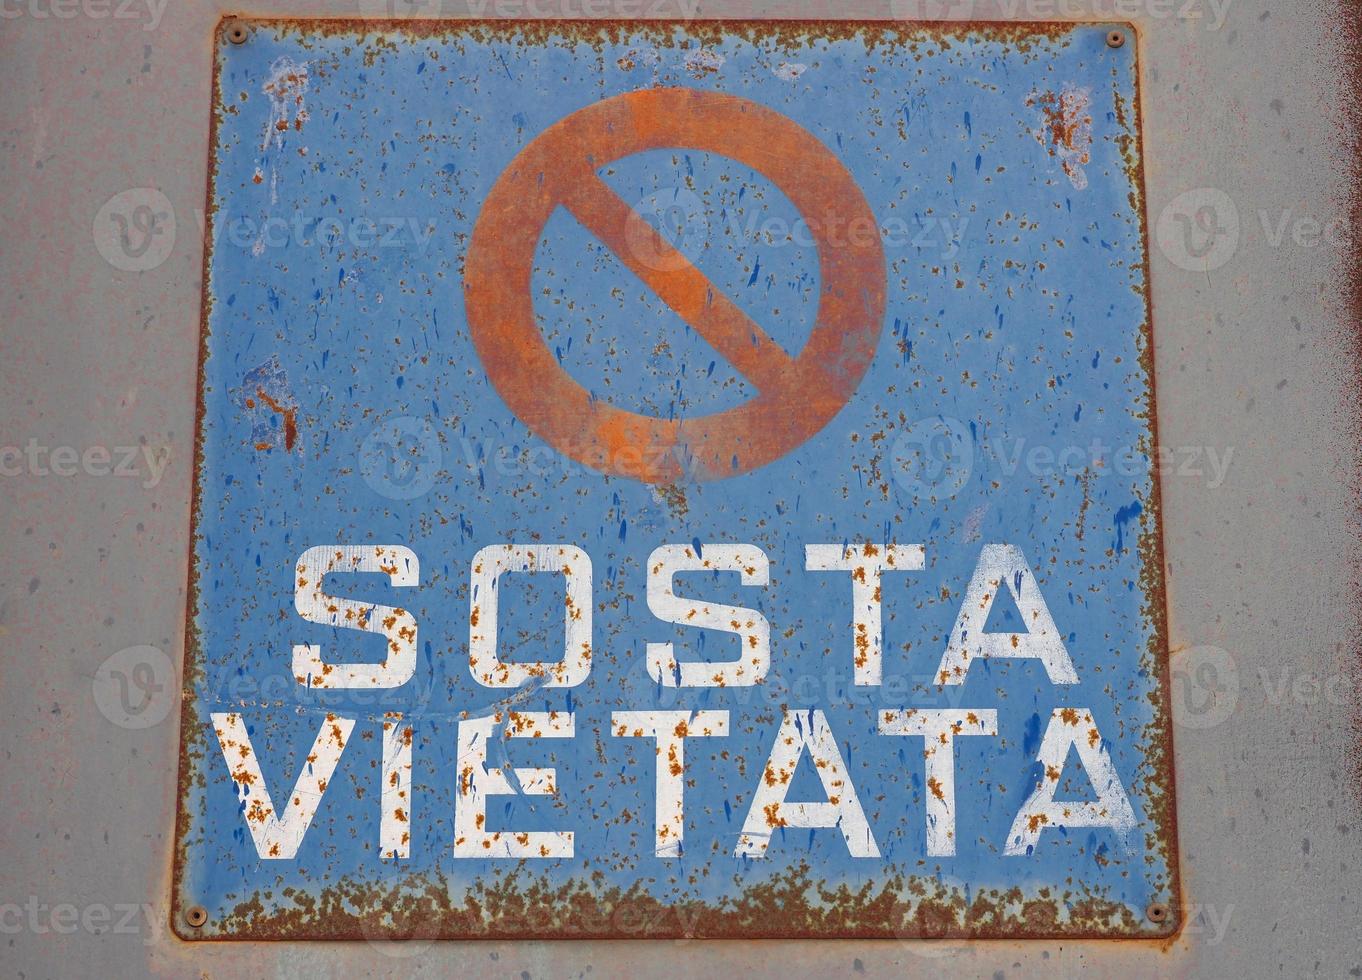 Italian sosta vietata translation no parking sign photo